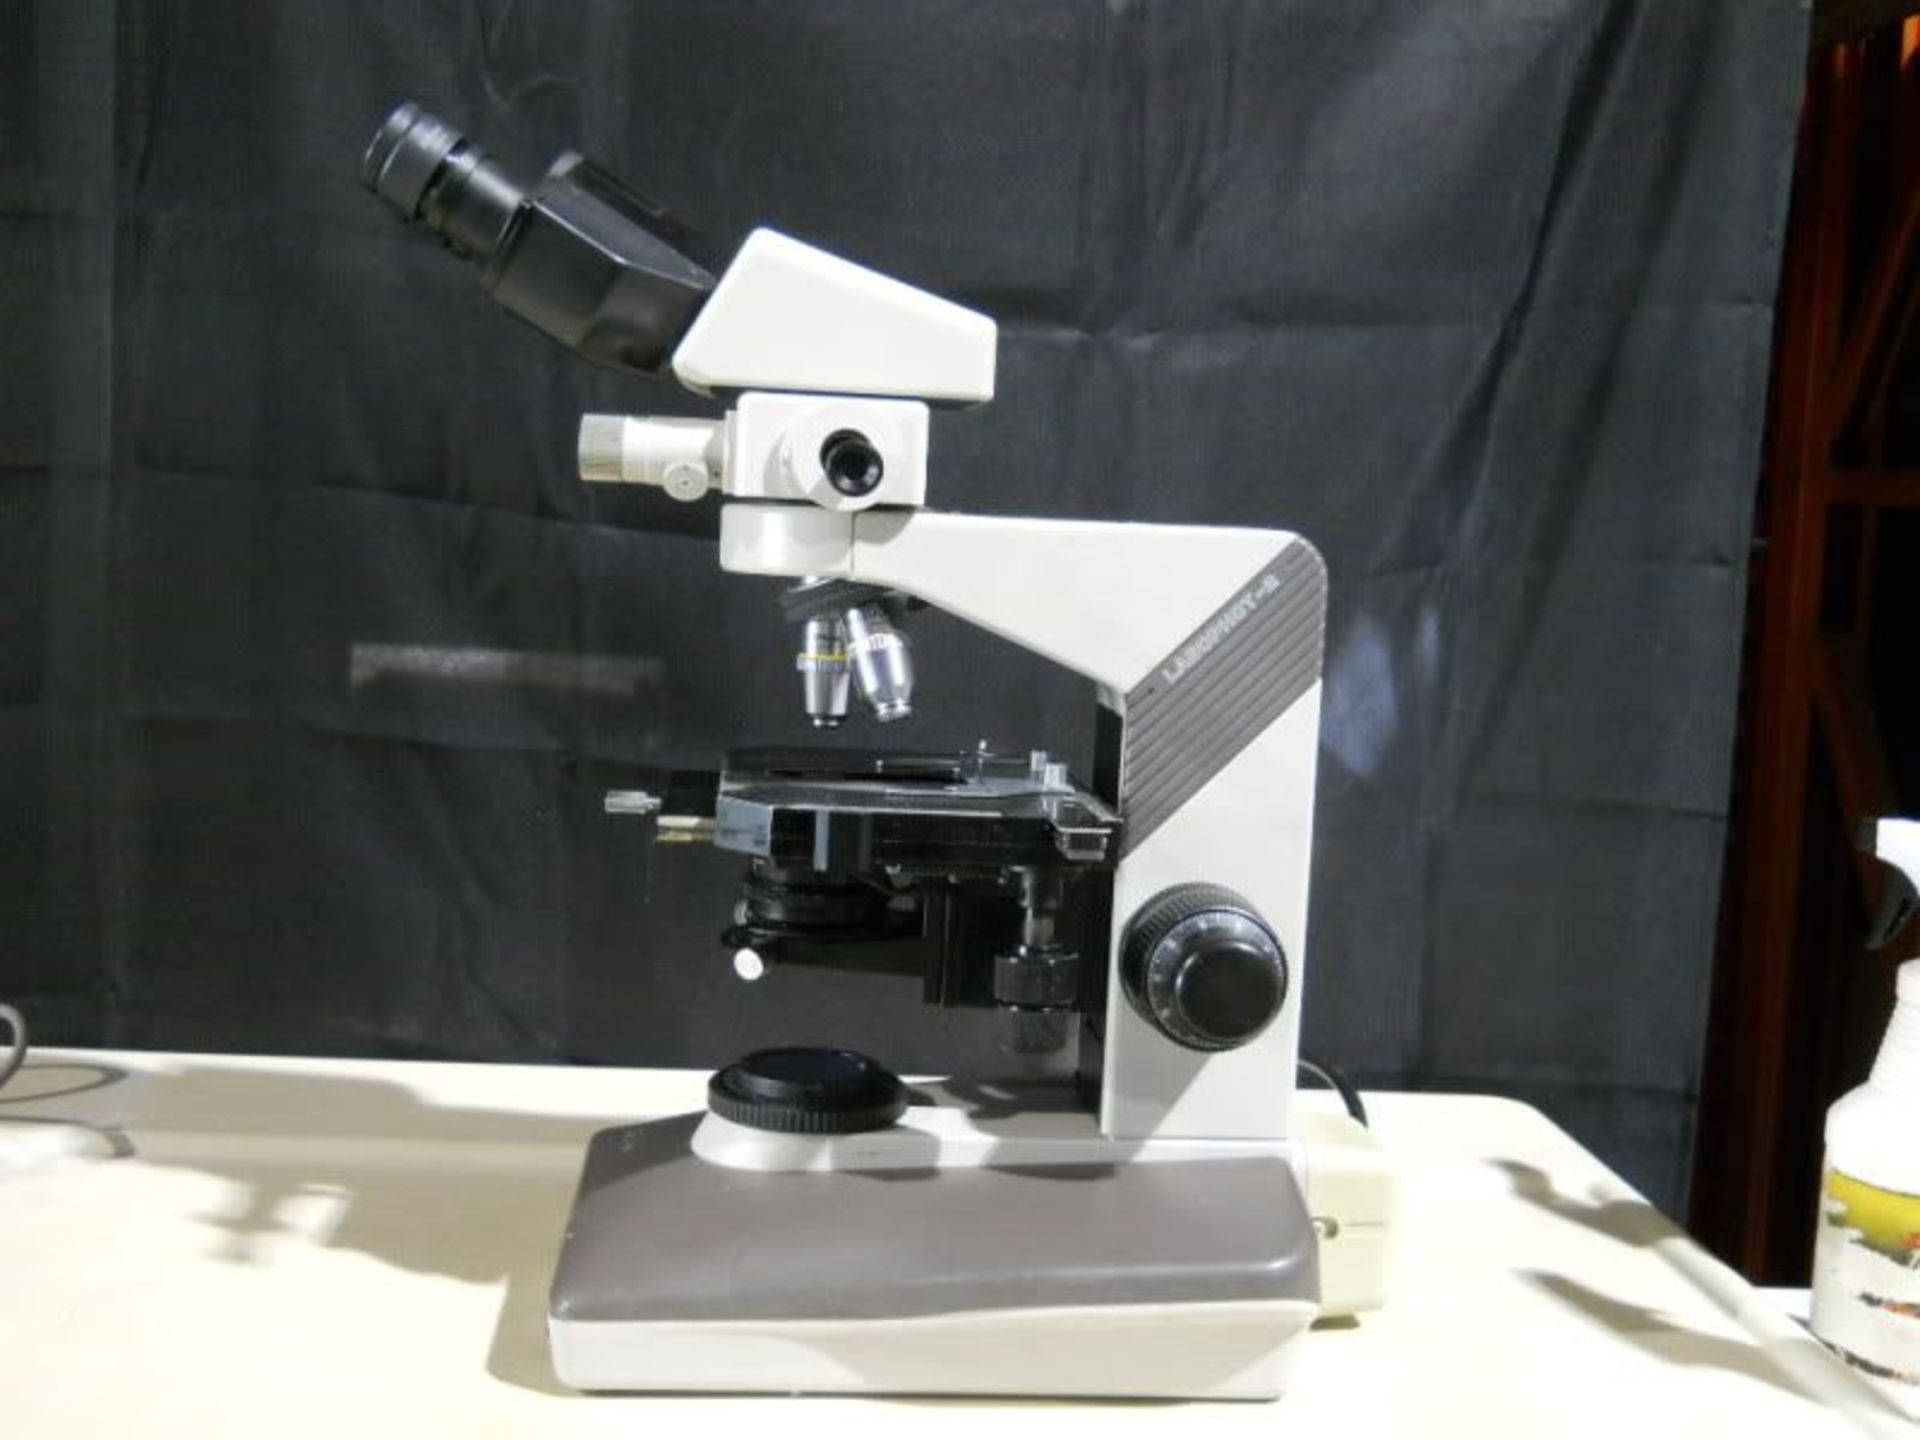 Nikon Labophot 2 Dual Viewing Teaching Microscope, Qty 1, 220748473340 - Image 7 of 10